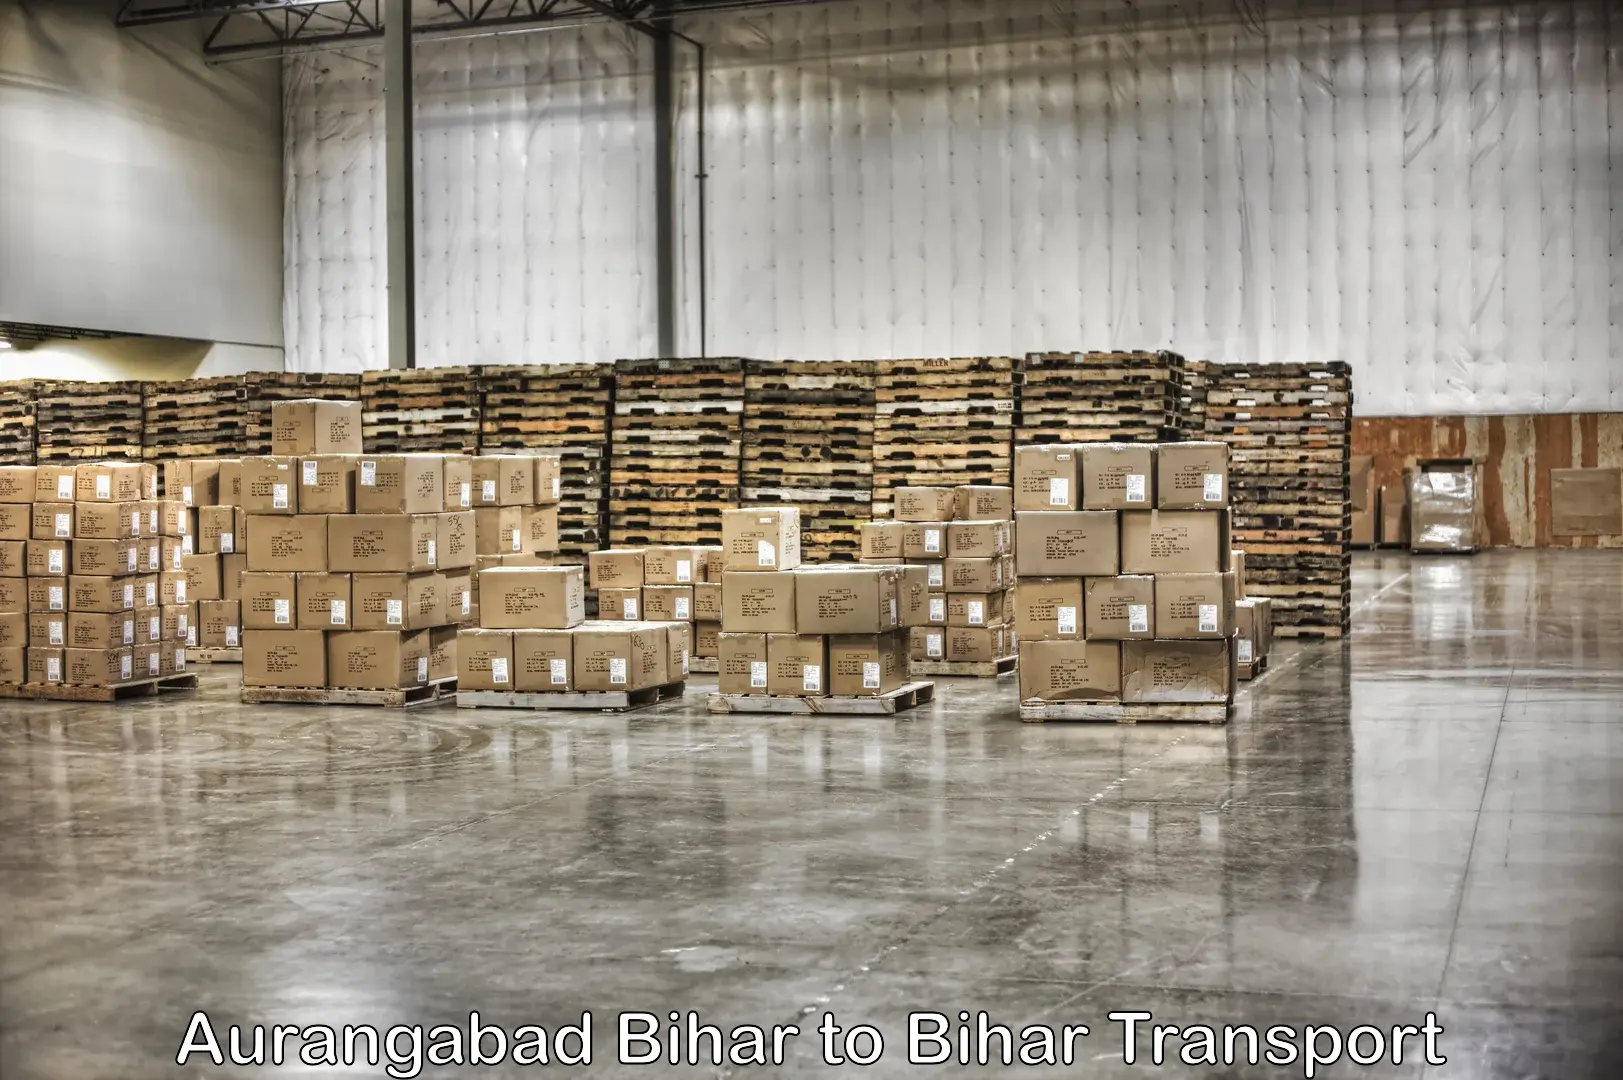 Goods delivery service in Aurangabad Bihar to Mahaddipur